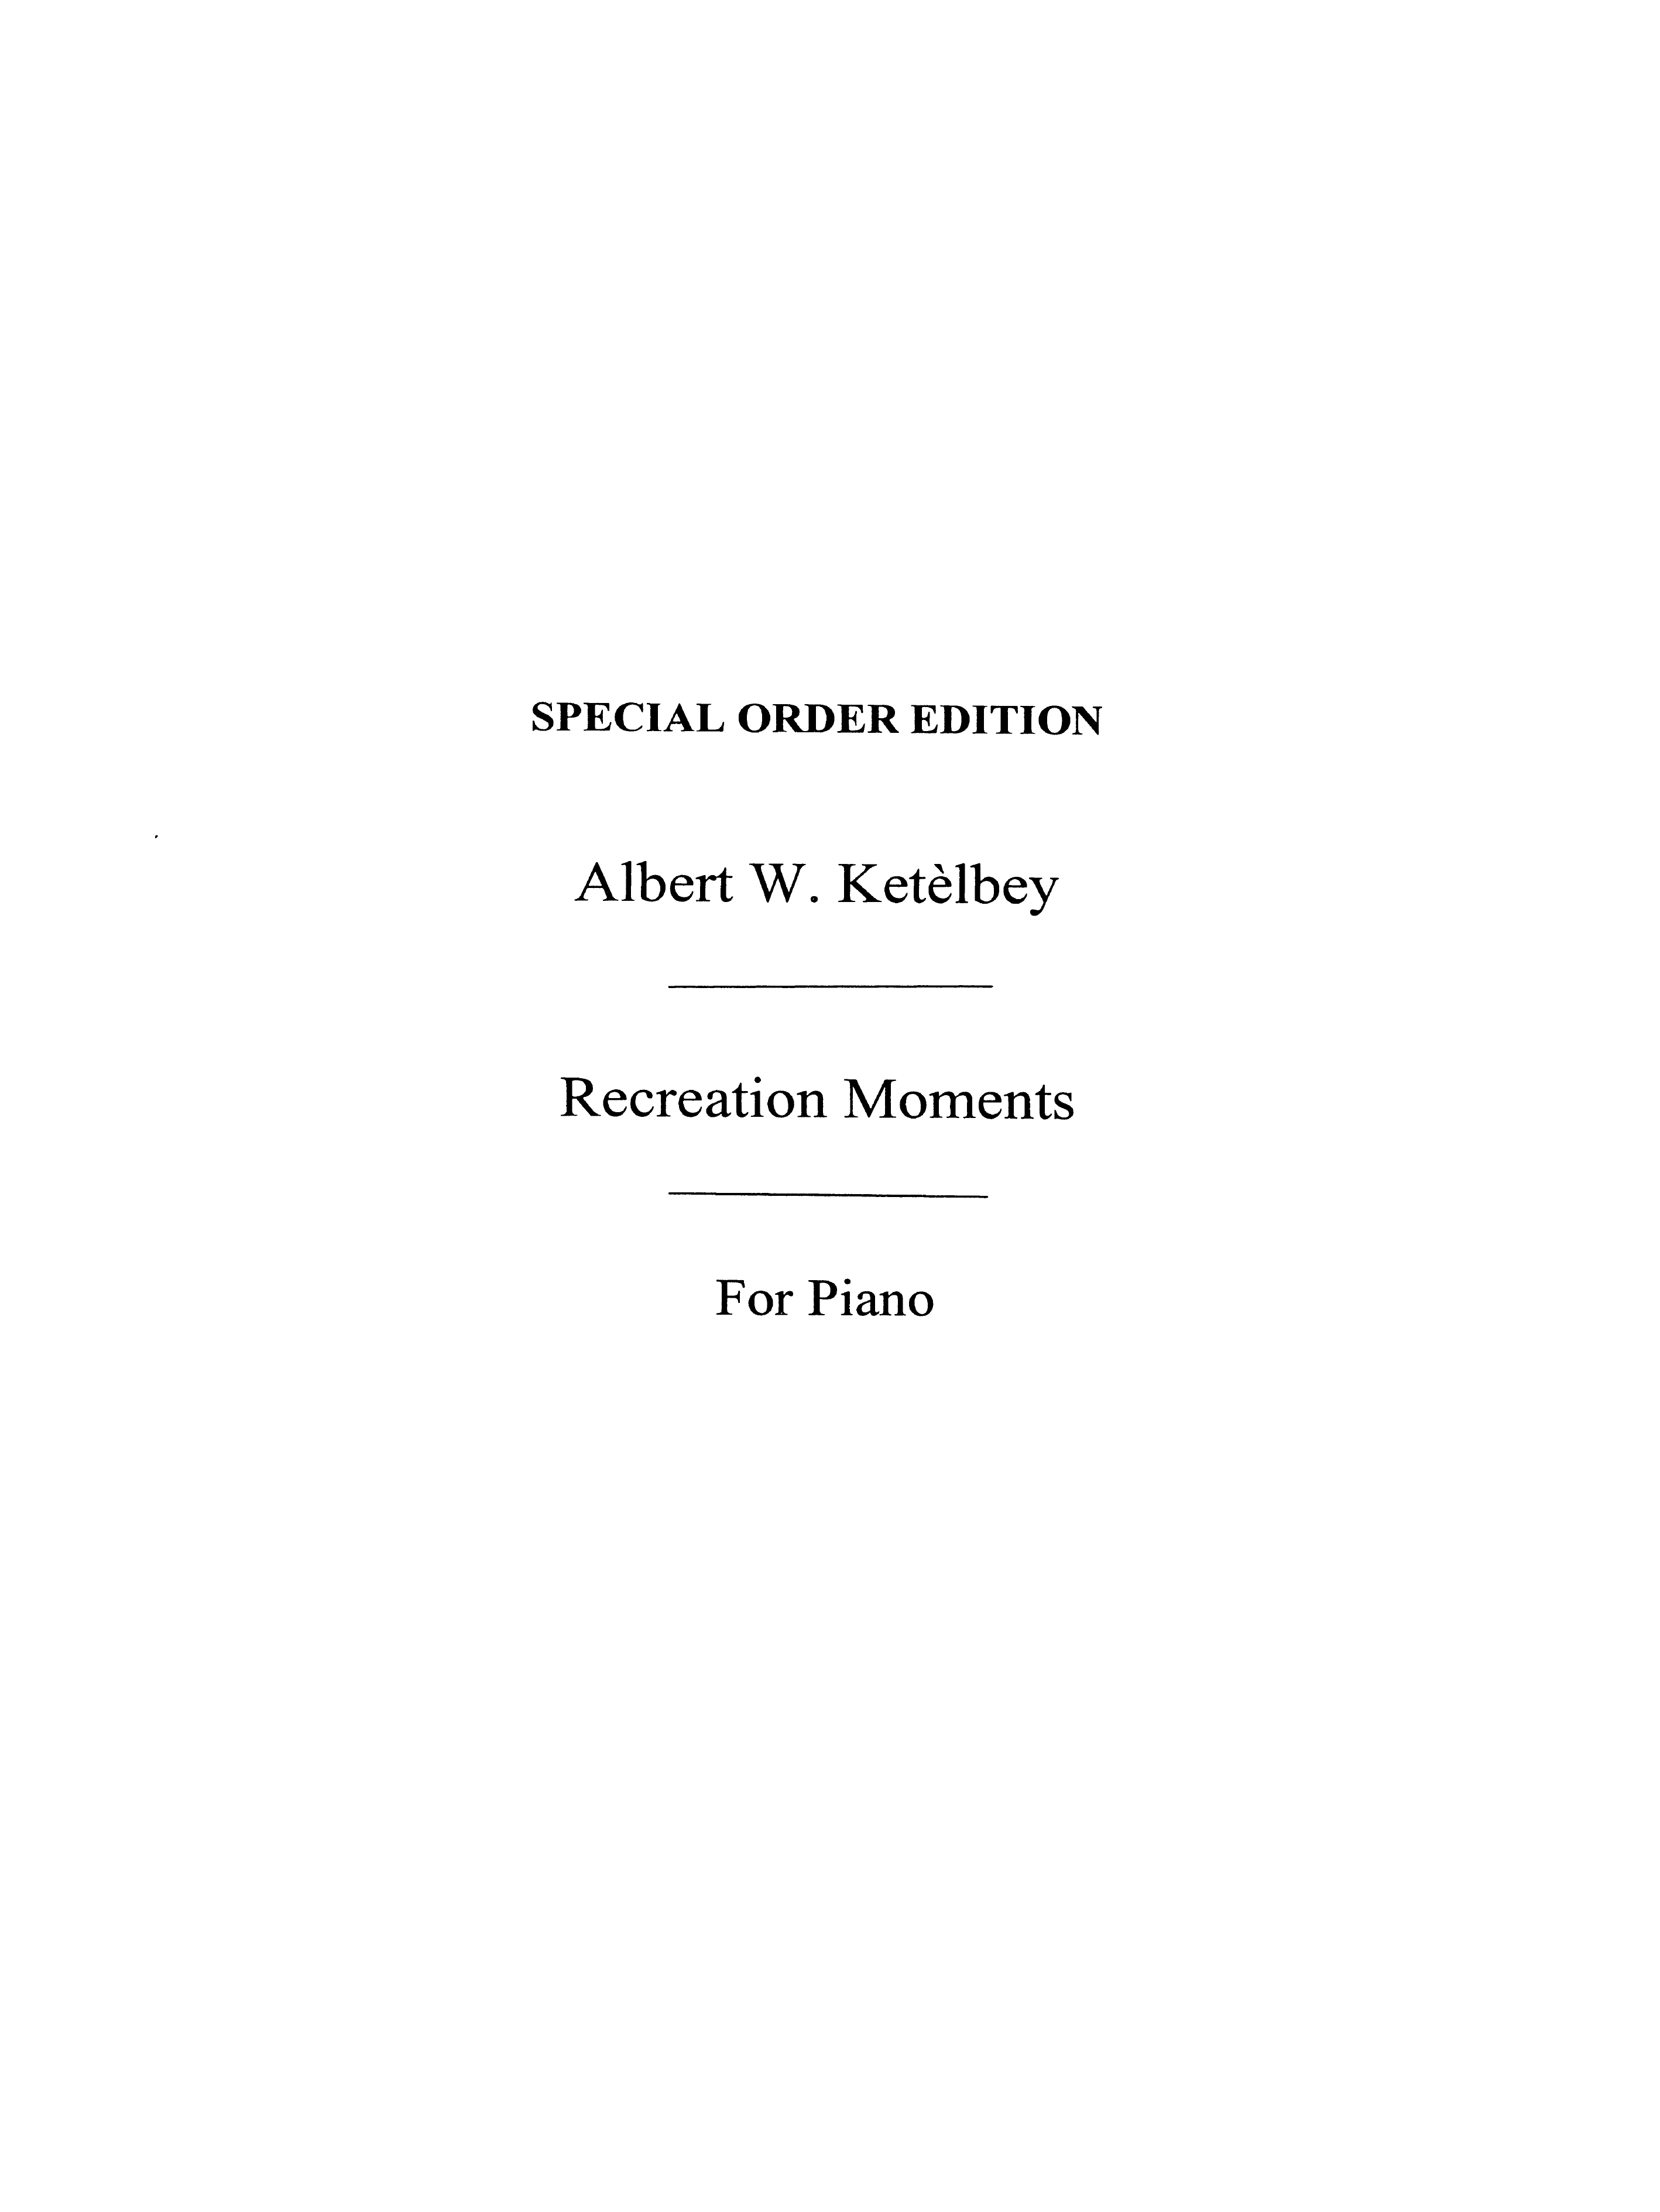 Albert Ketelbey: Recreation Moments (Piano)